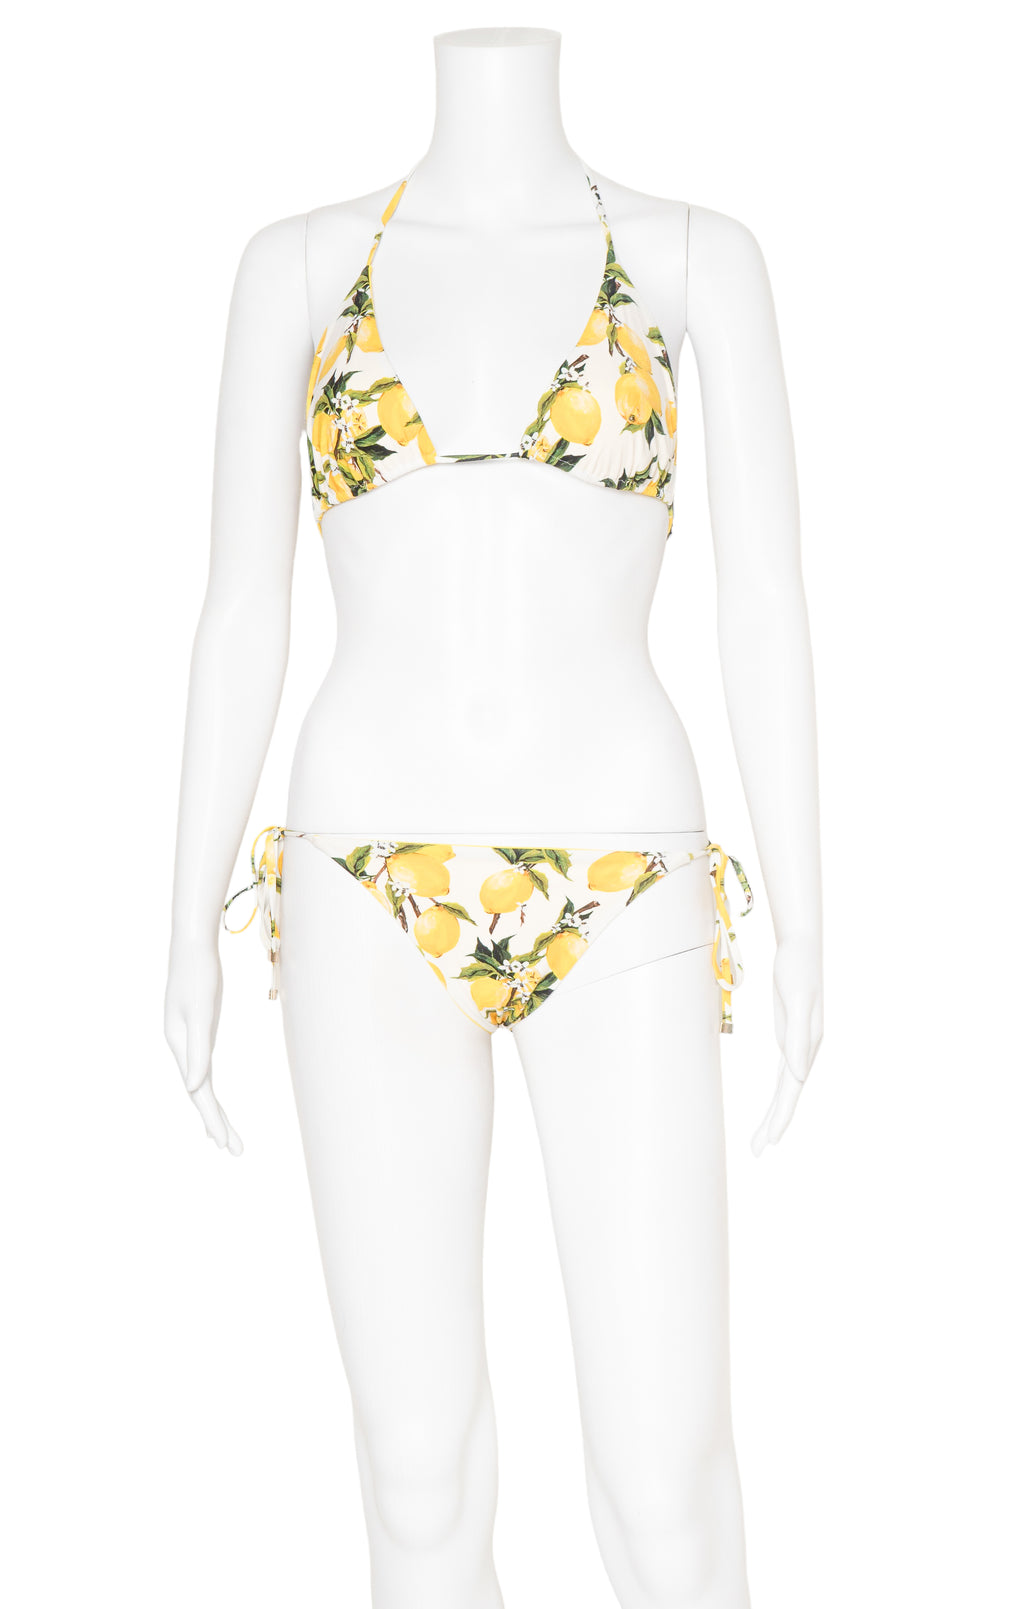 DOLCE & GABBANA (RARE & NEW) with tags Bikini Set Size: Top - M Bottoms - No size tags, fit like M/L